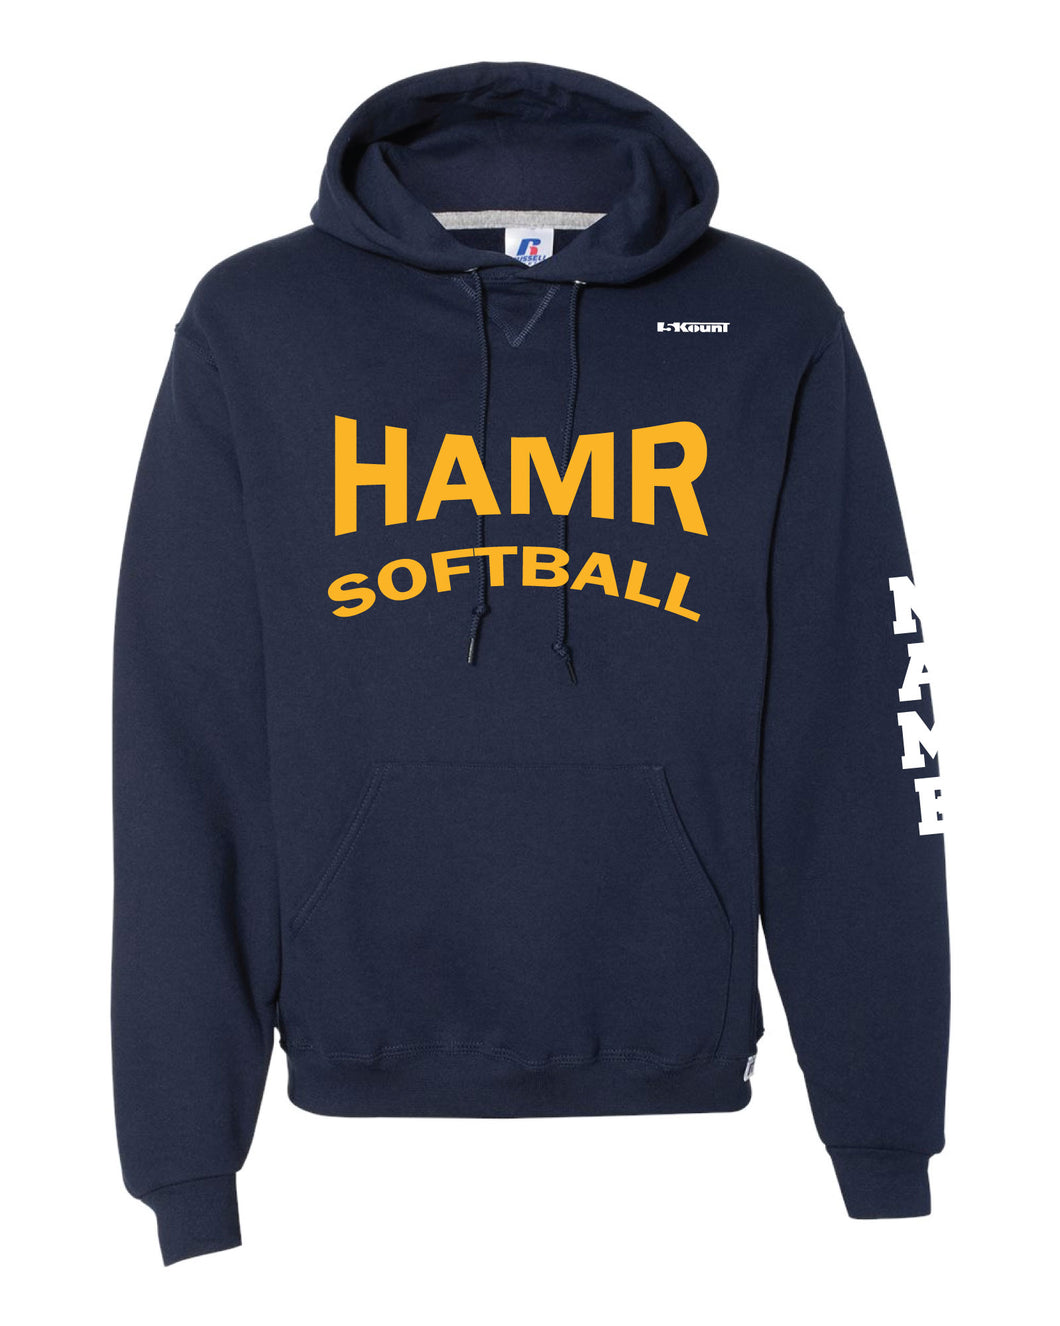 HAMR Softball Russell Athletic Cotton Hoodie - Navy - 5KounT2018